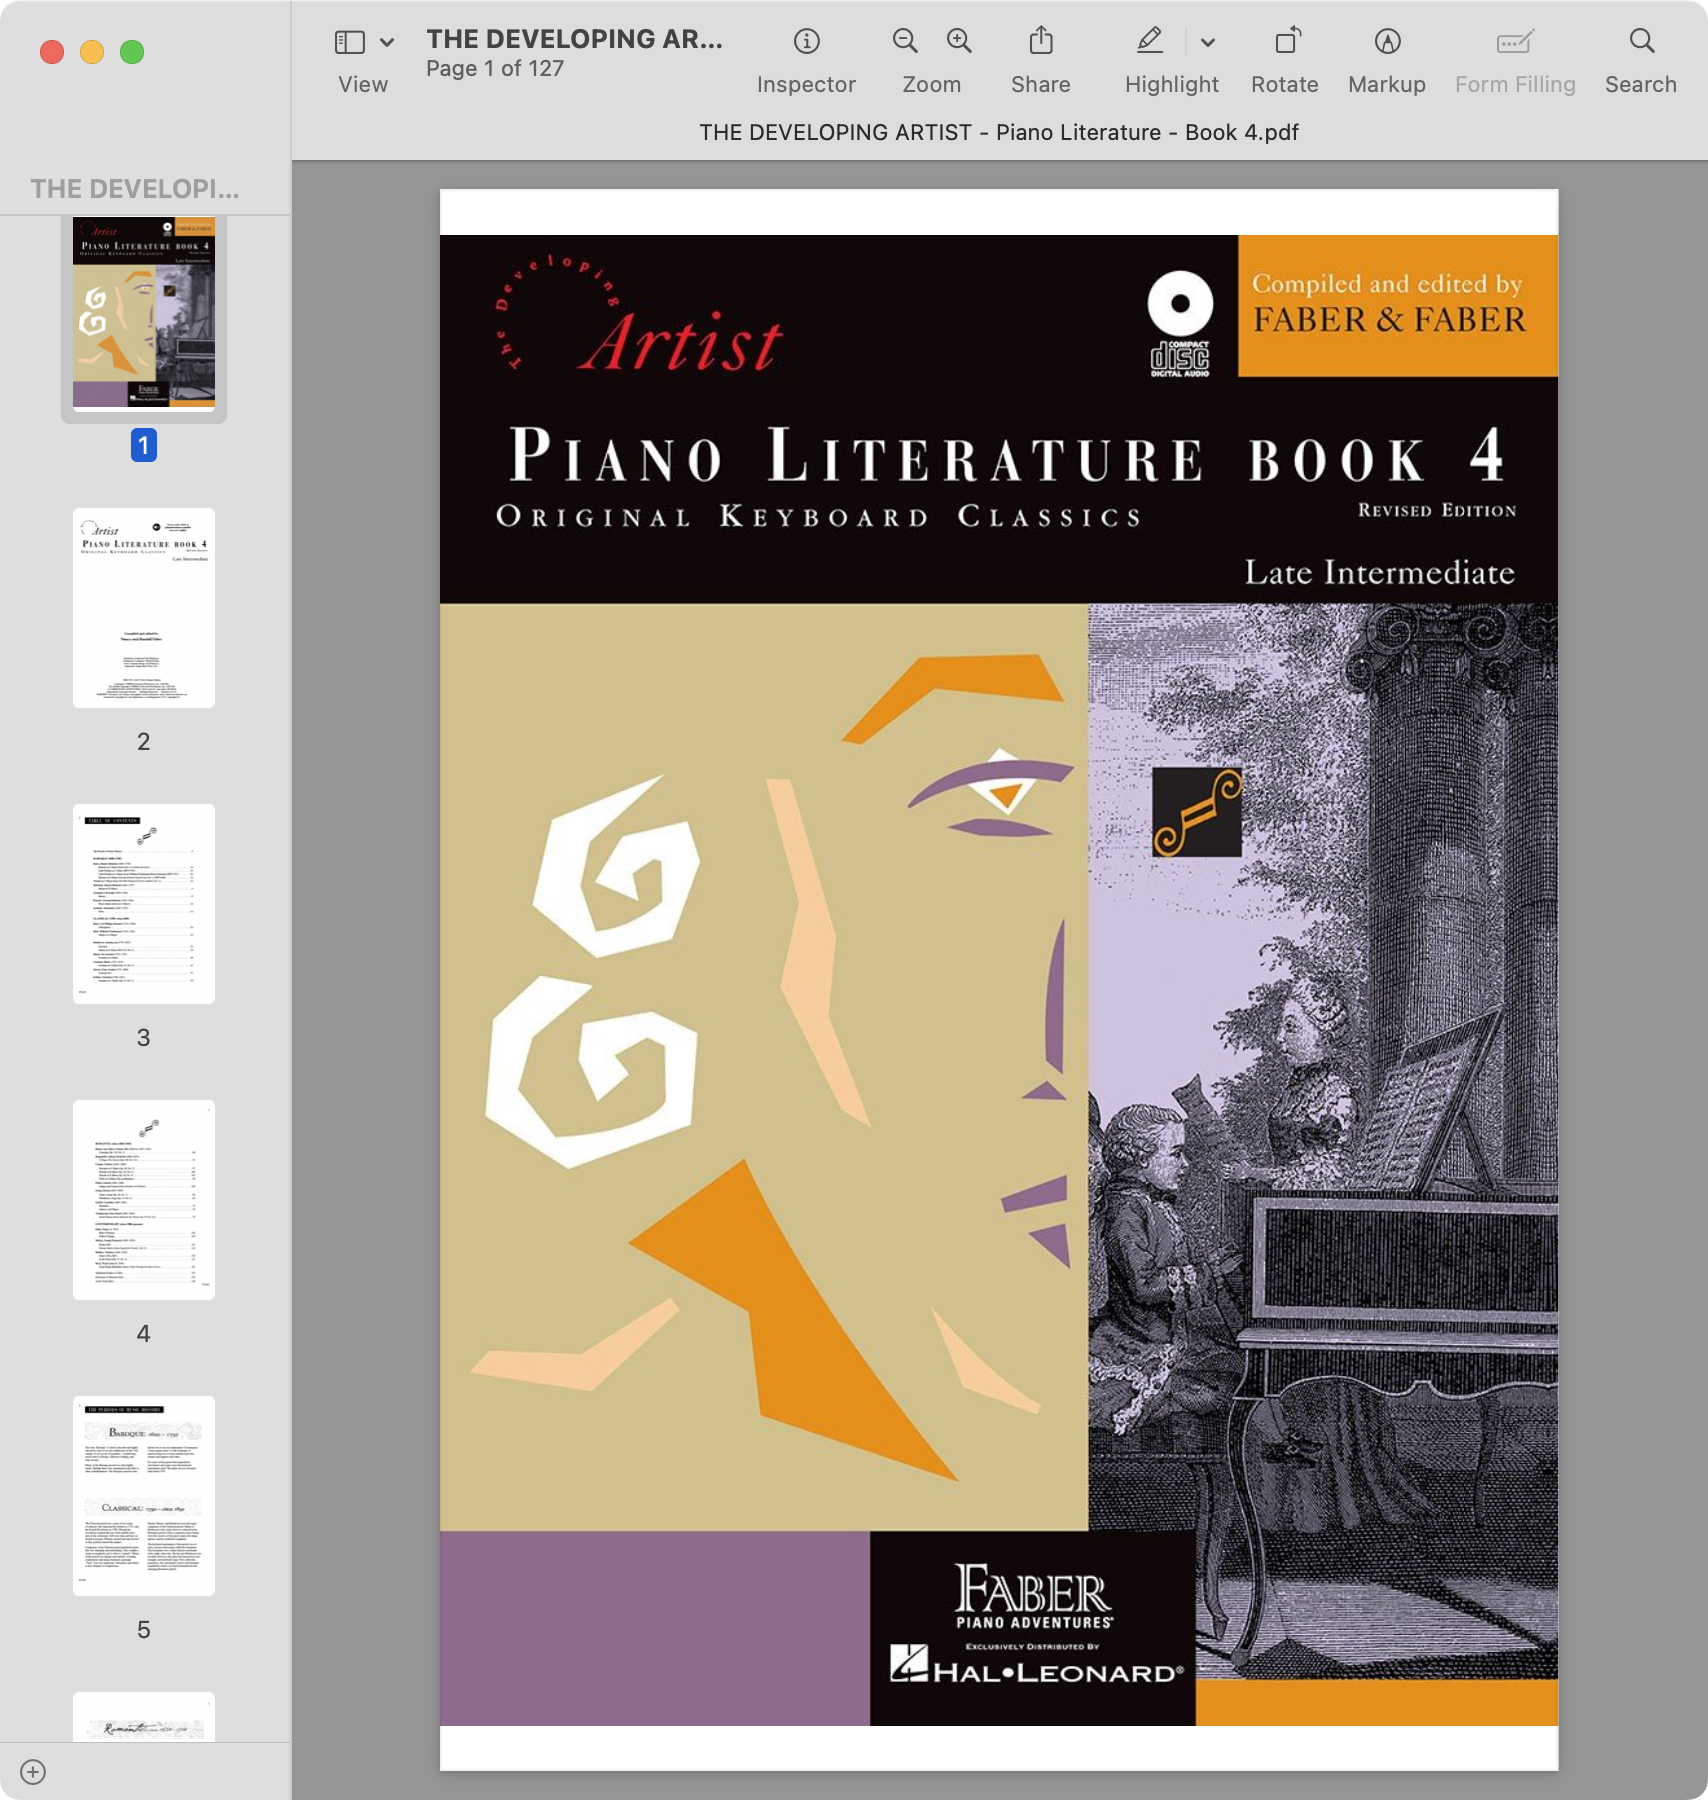 THE DEVELOPING ARTIST - Piano Literature - Book 4.jpg